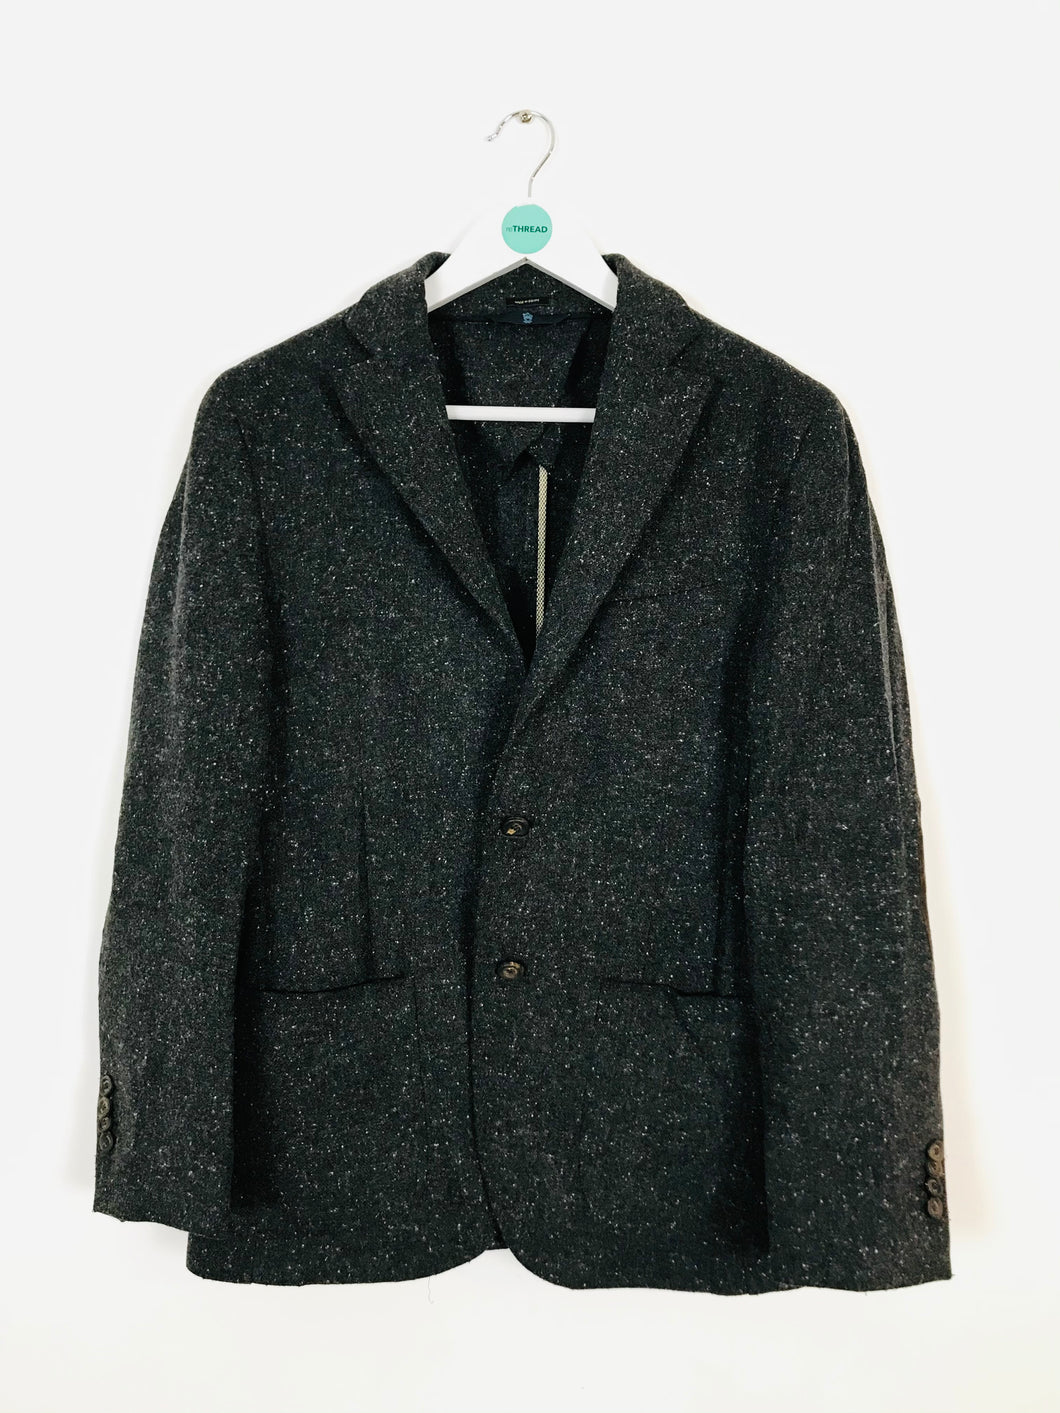 Massimo Dutti Men’s Blazer Suit Jacket | 40 M | Grey